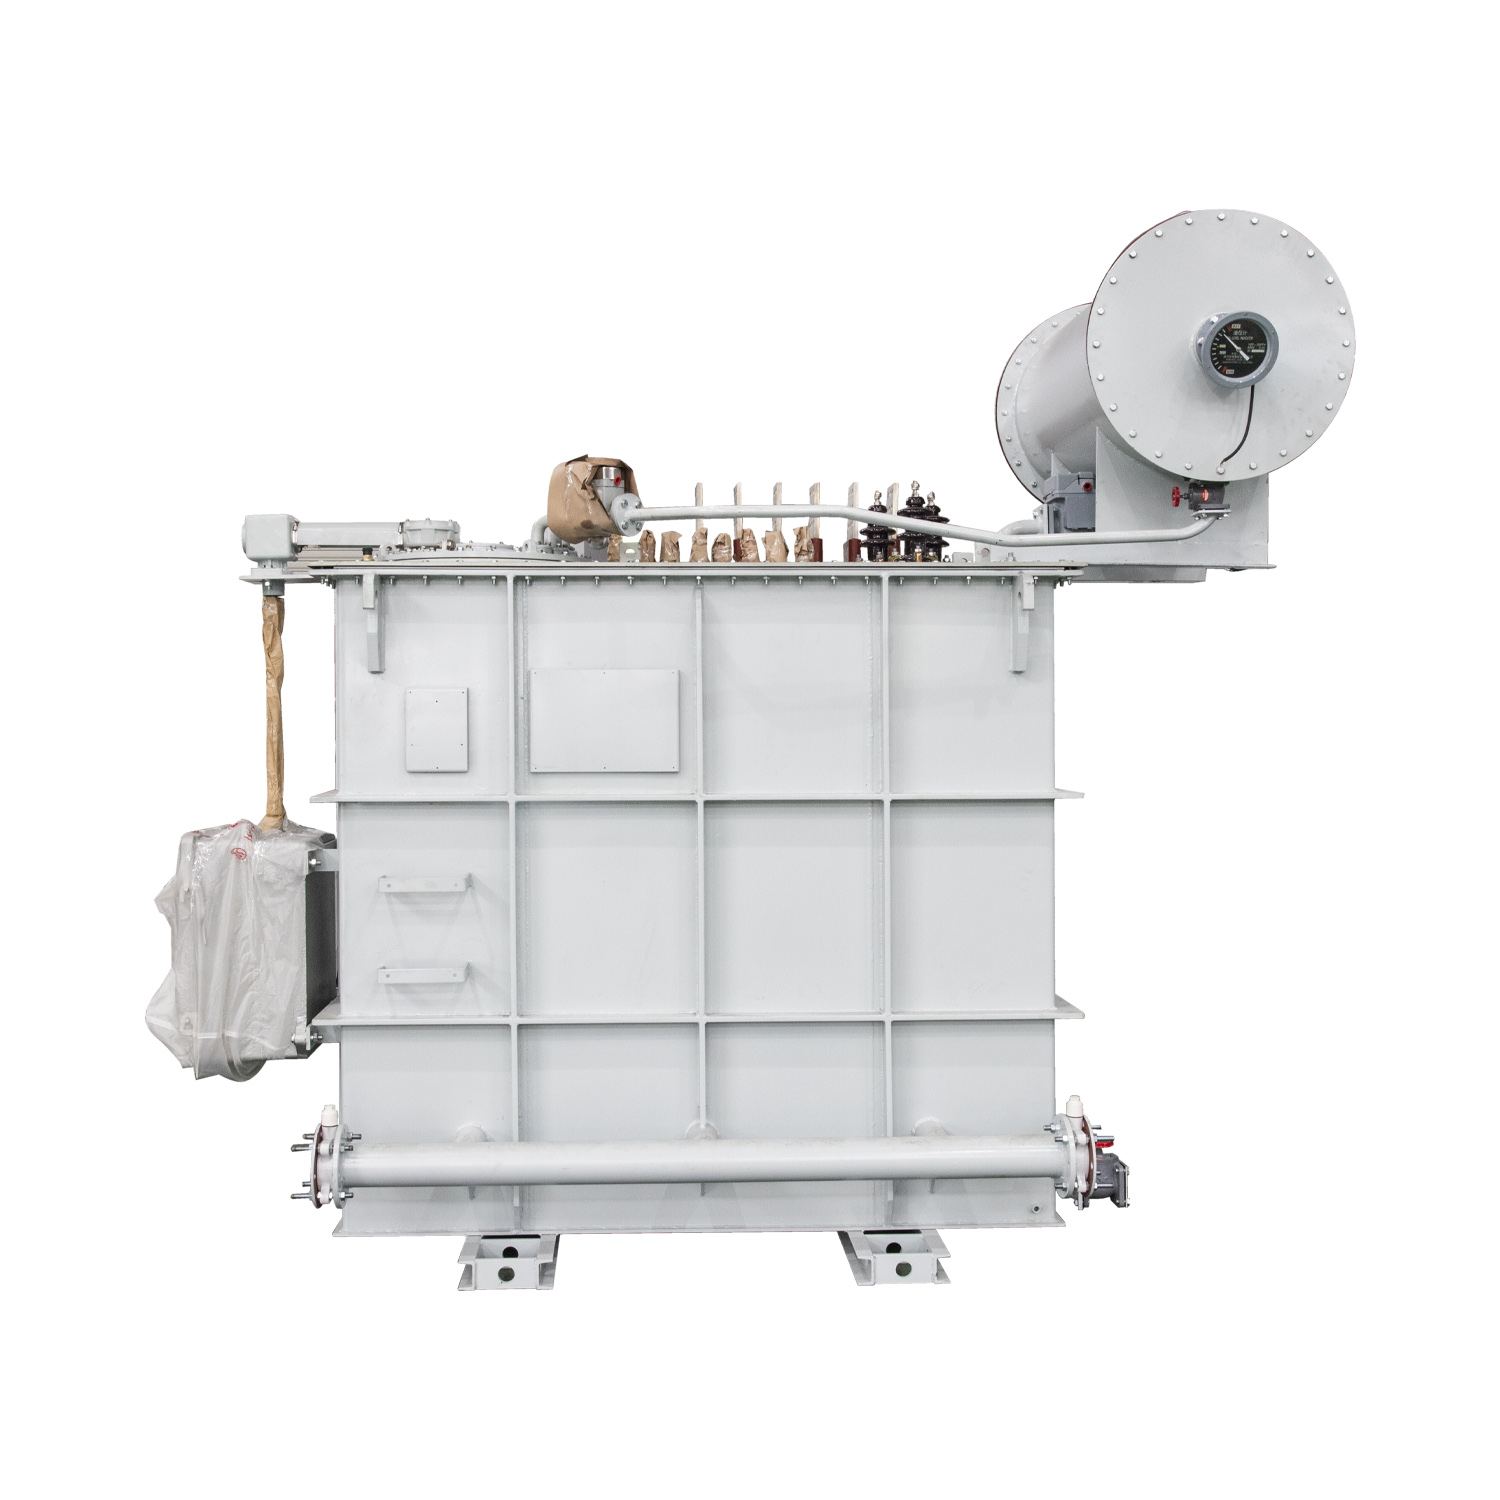 core-type 35kv furnace transformer for submerged arc furnace